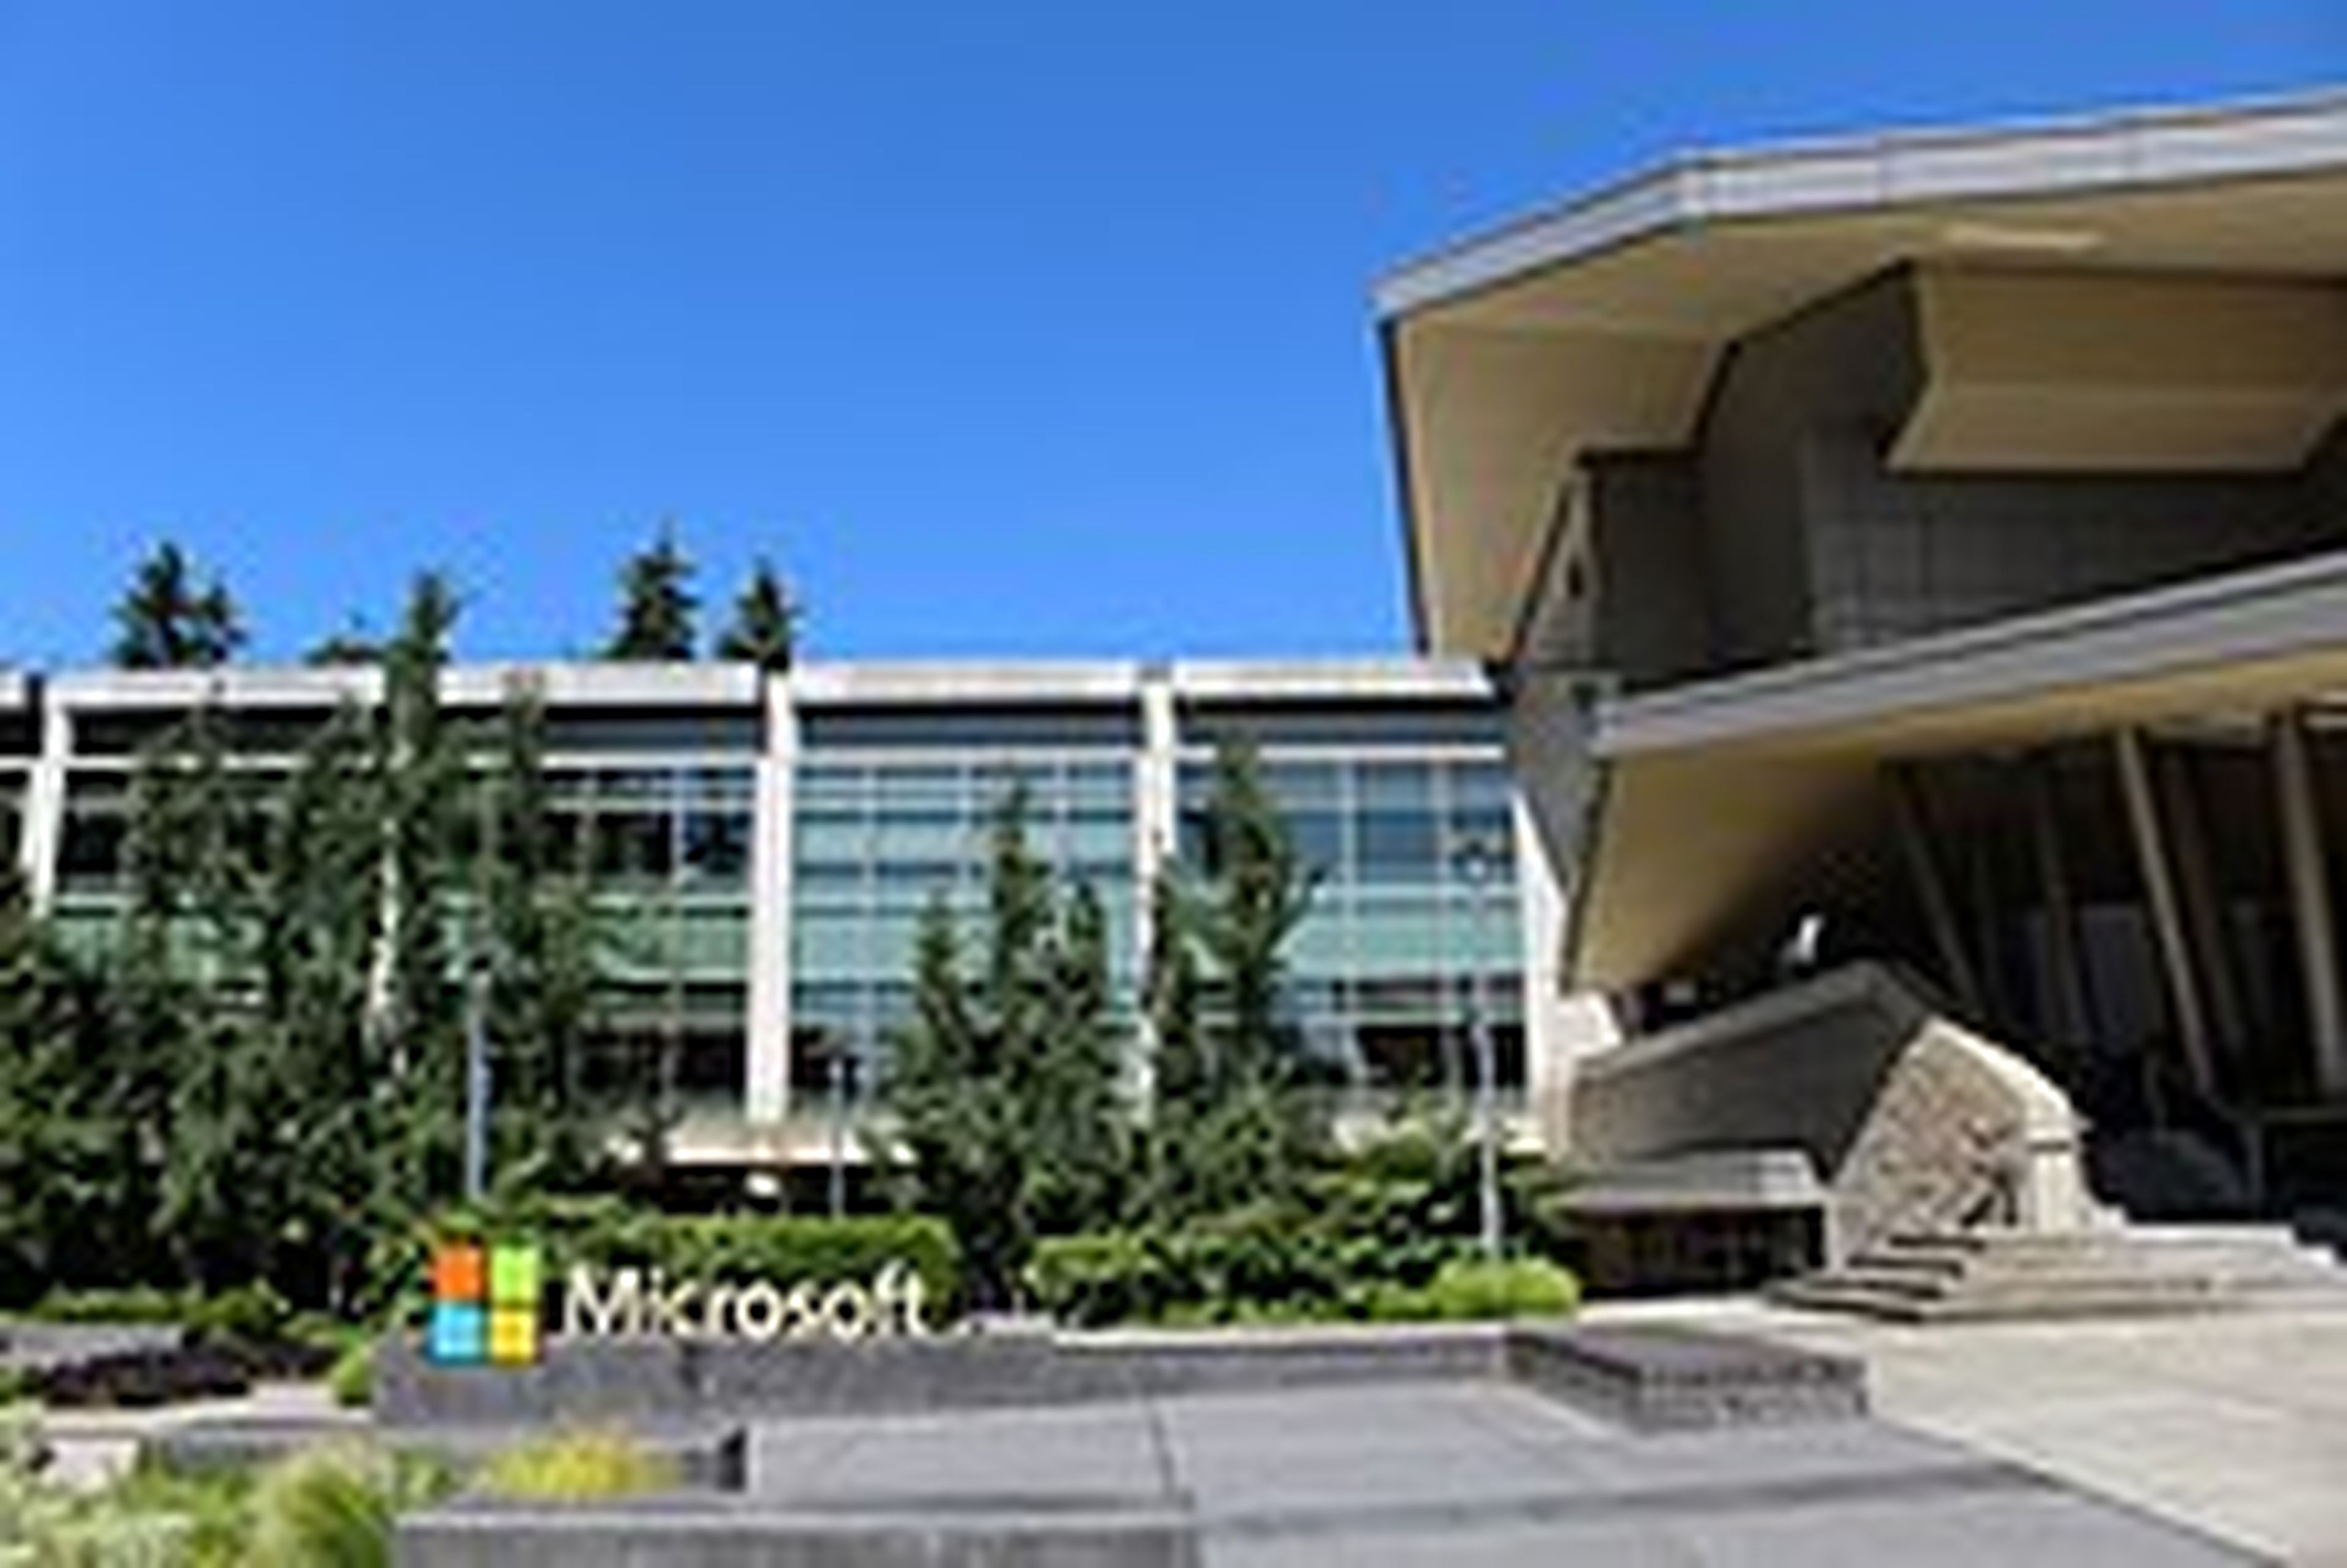 Microsoft Building 92